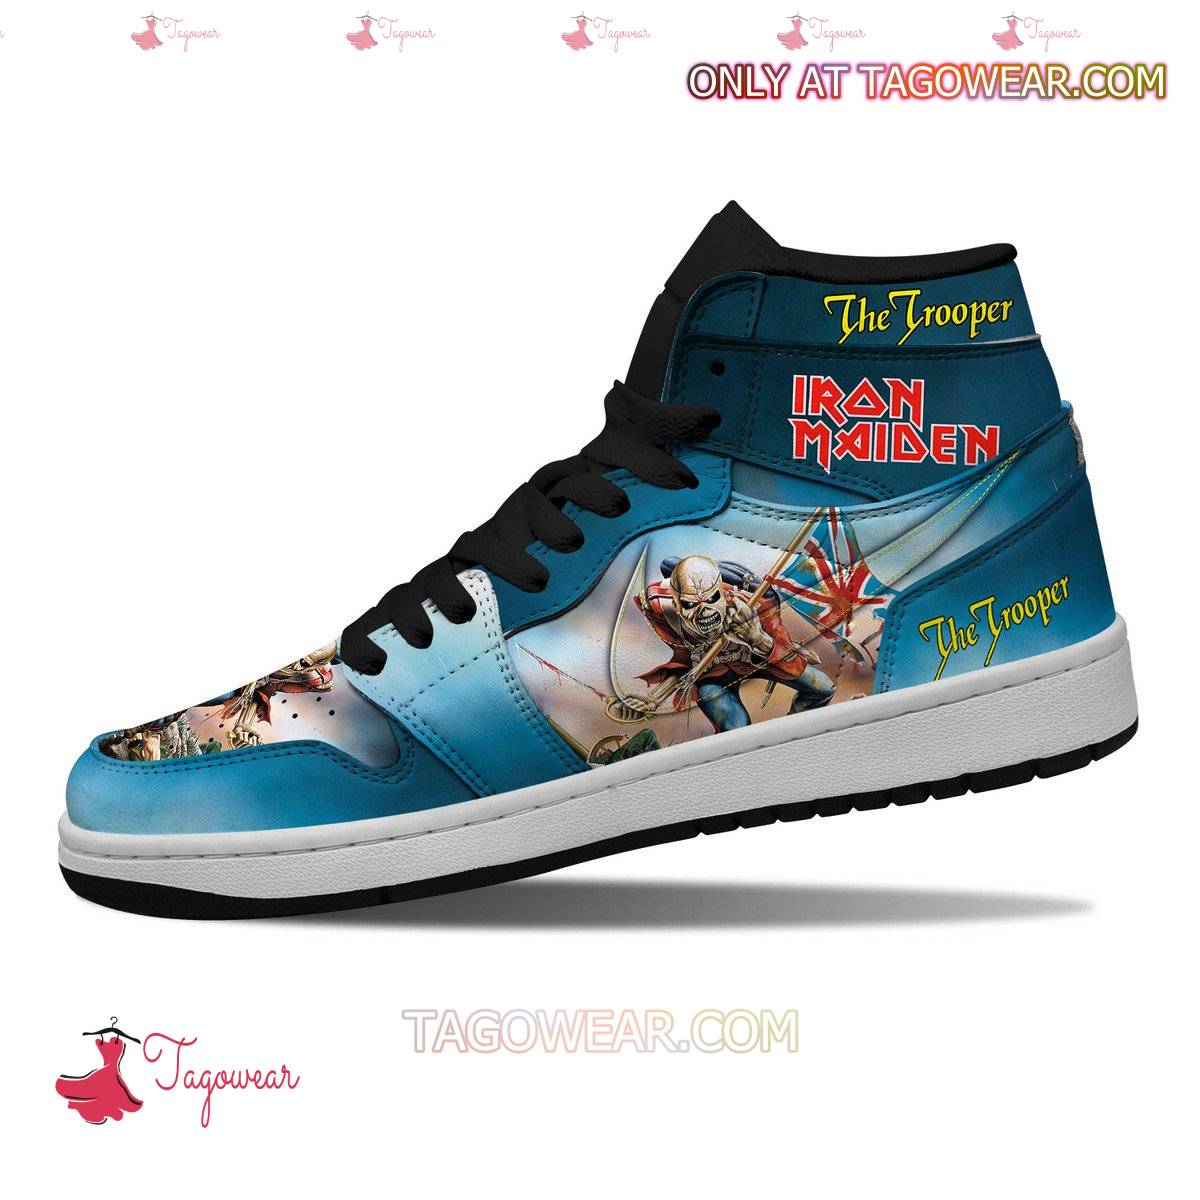 Iron Maiden The Trooper Air Jordan High Top Shoes b